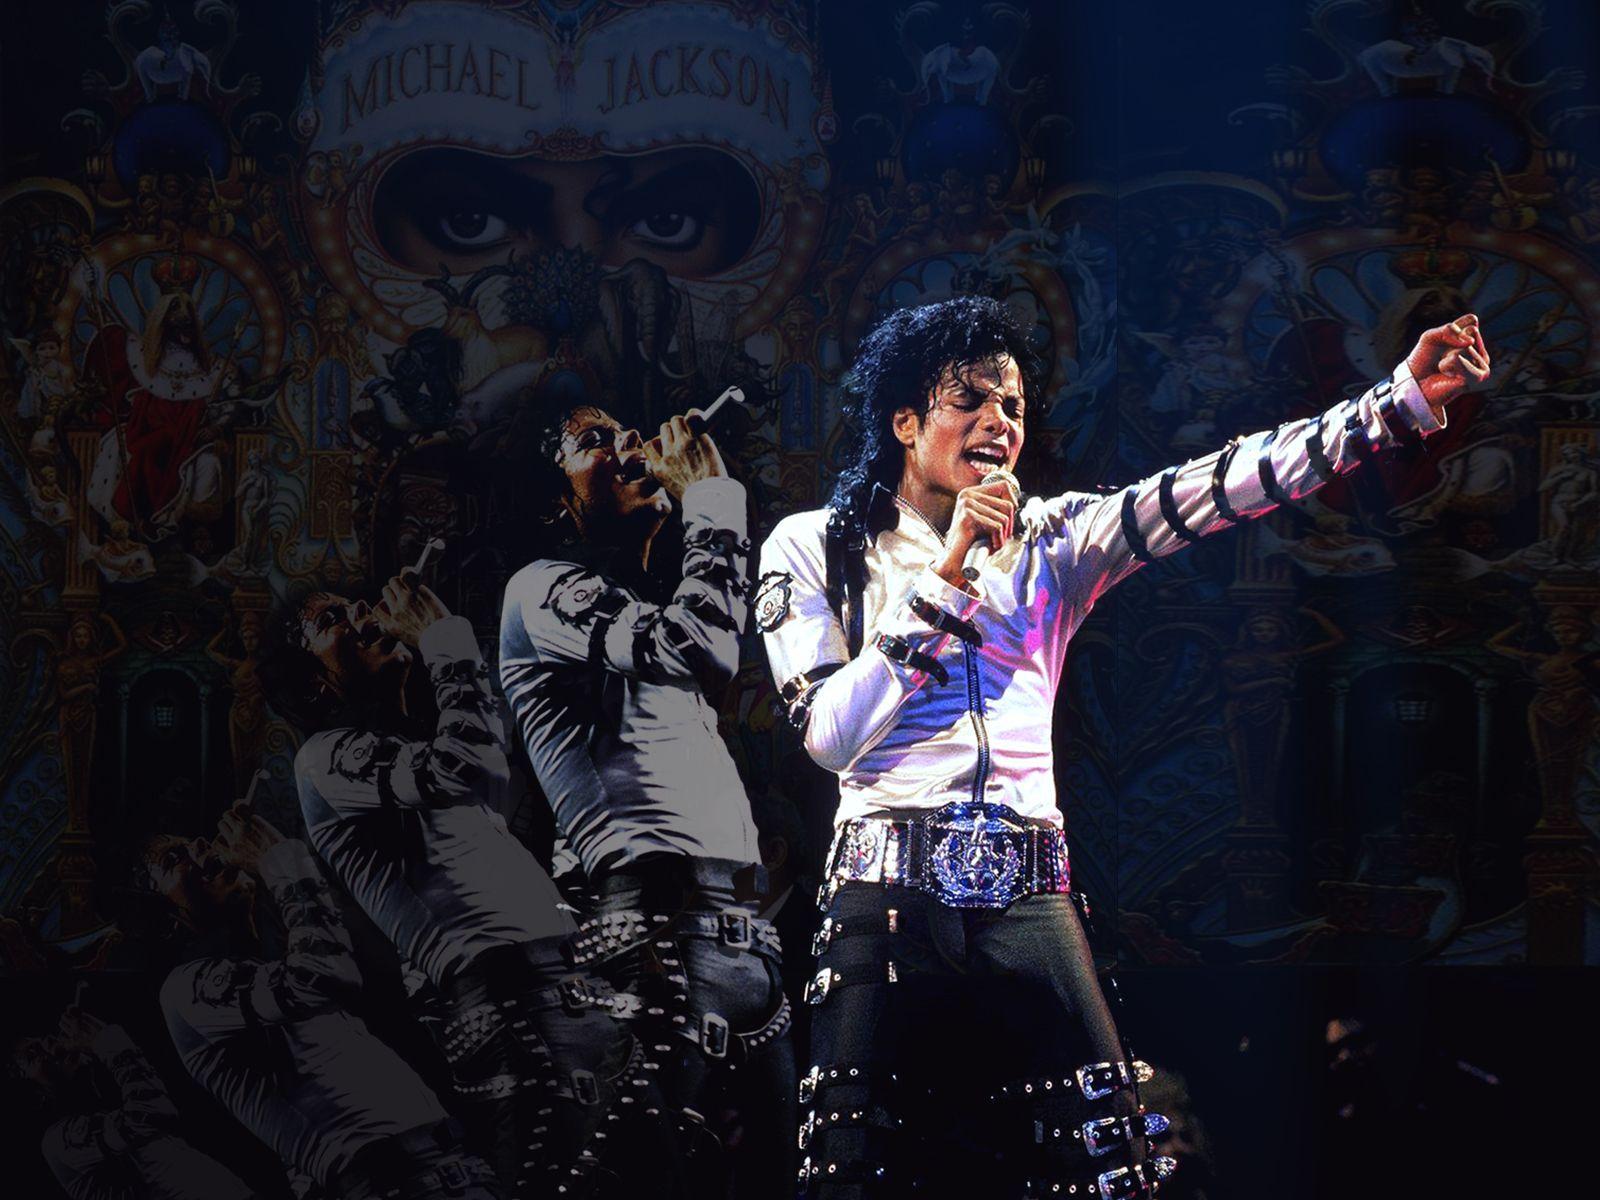 MJ Dangerous. Western Costume Inspirations. Michael